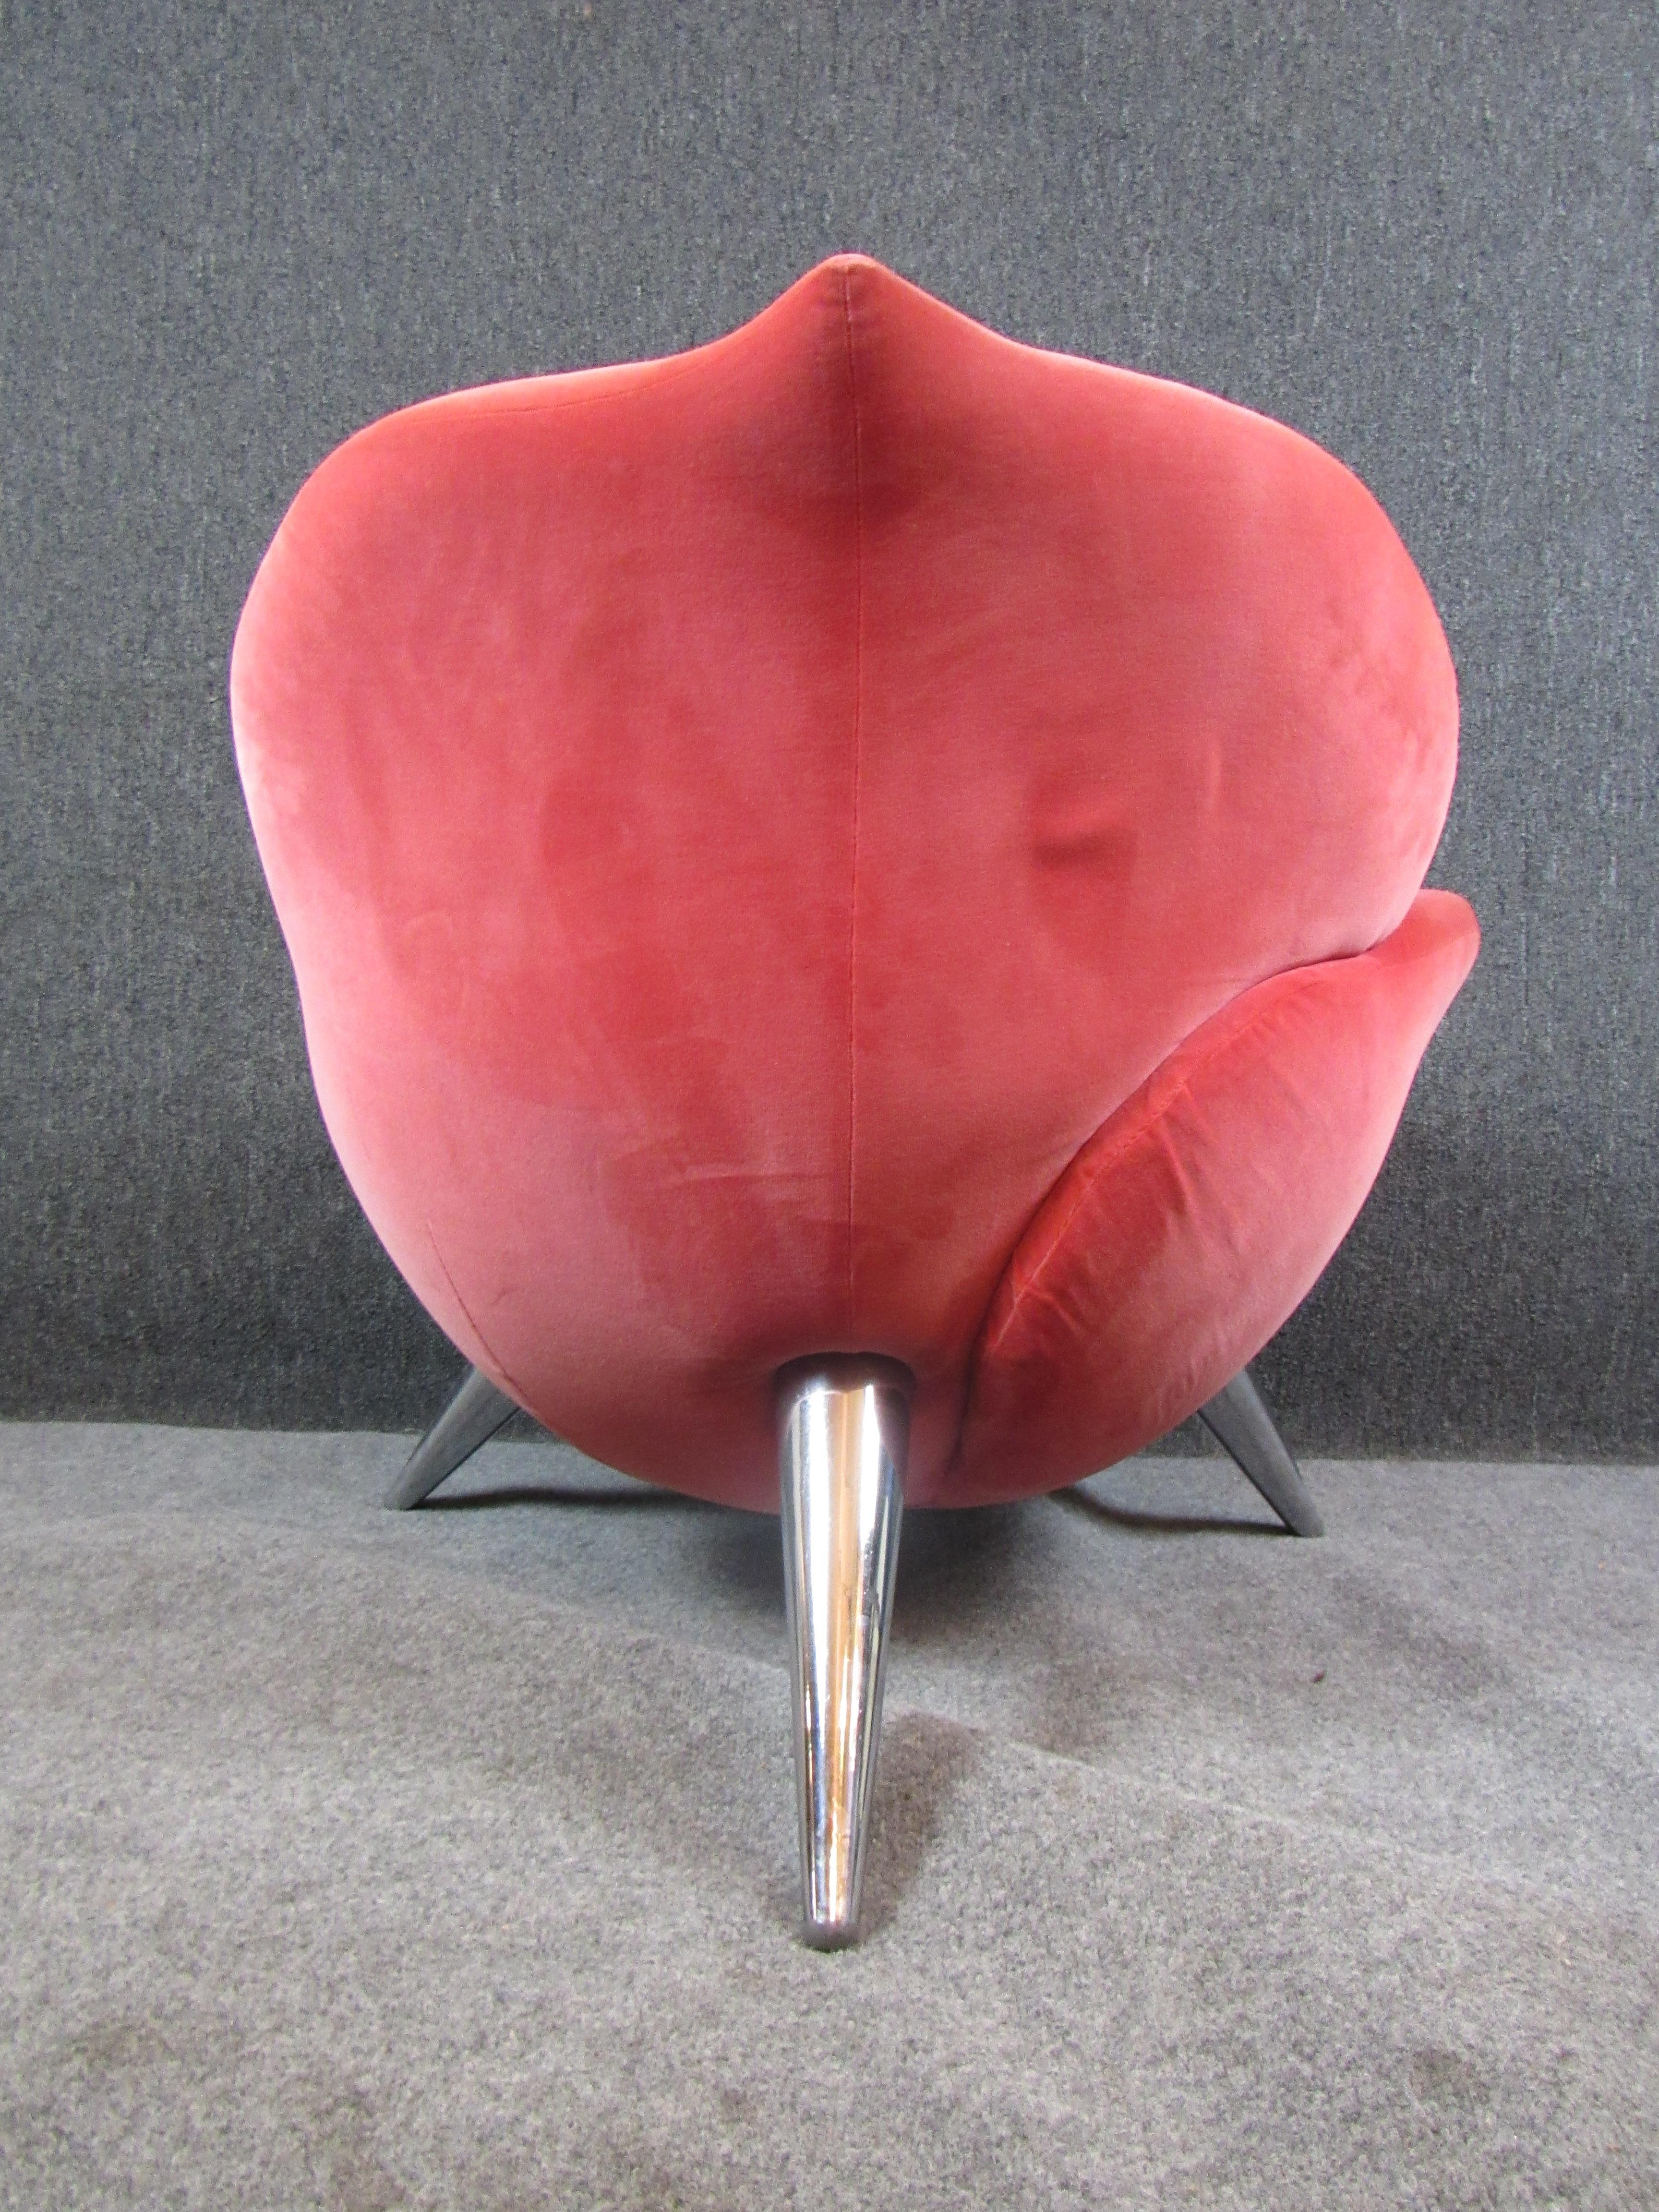 Post-Modern Vintage Rose Petal Chair by Masanori Umeda for Edra